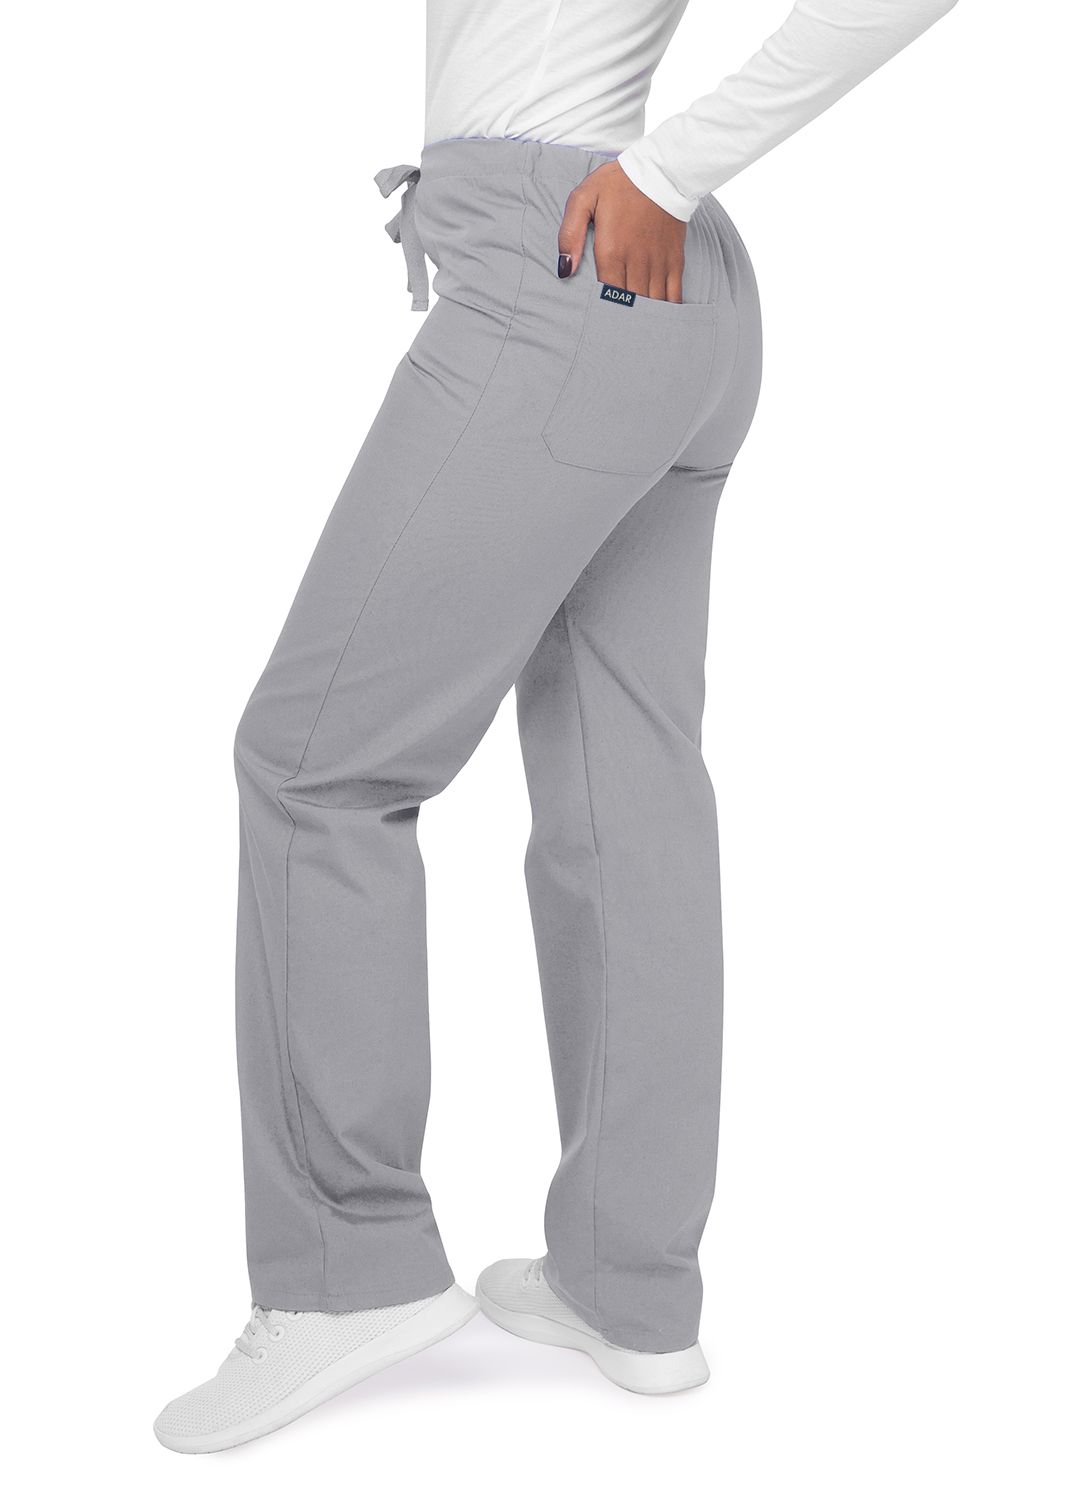 Unisex Drawstring Pants by Adar XS-5X / Silver Gray